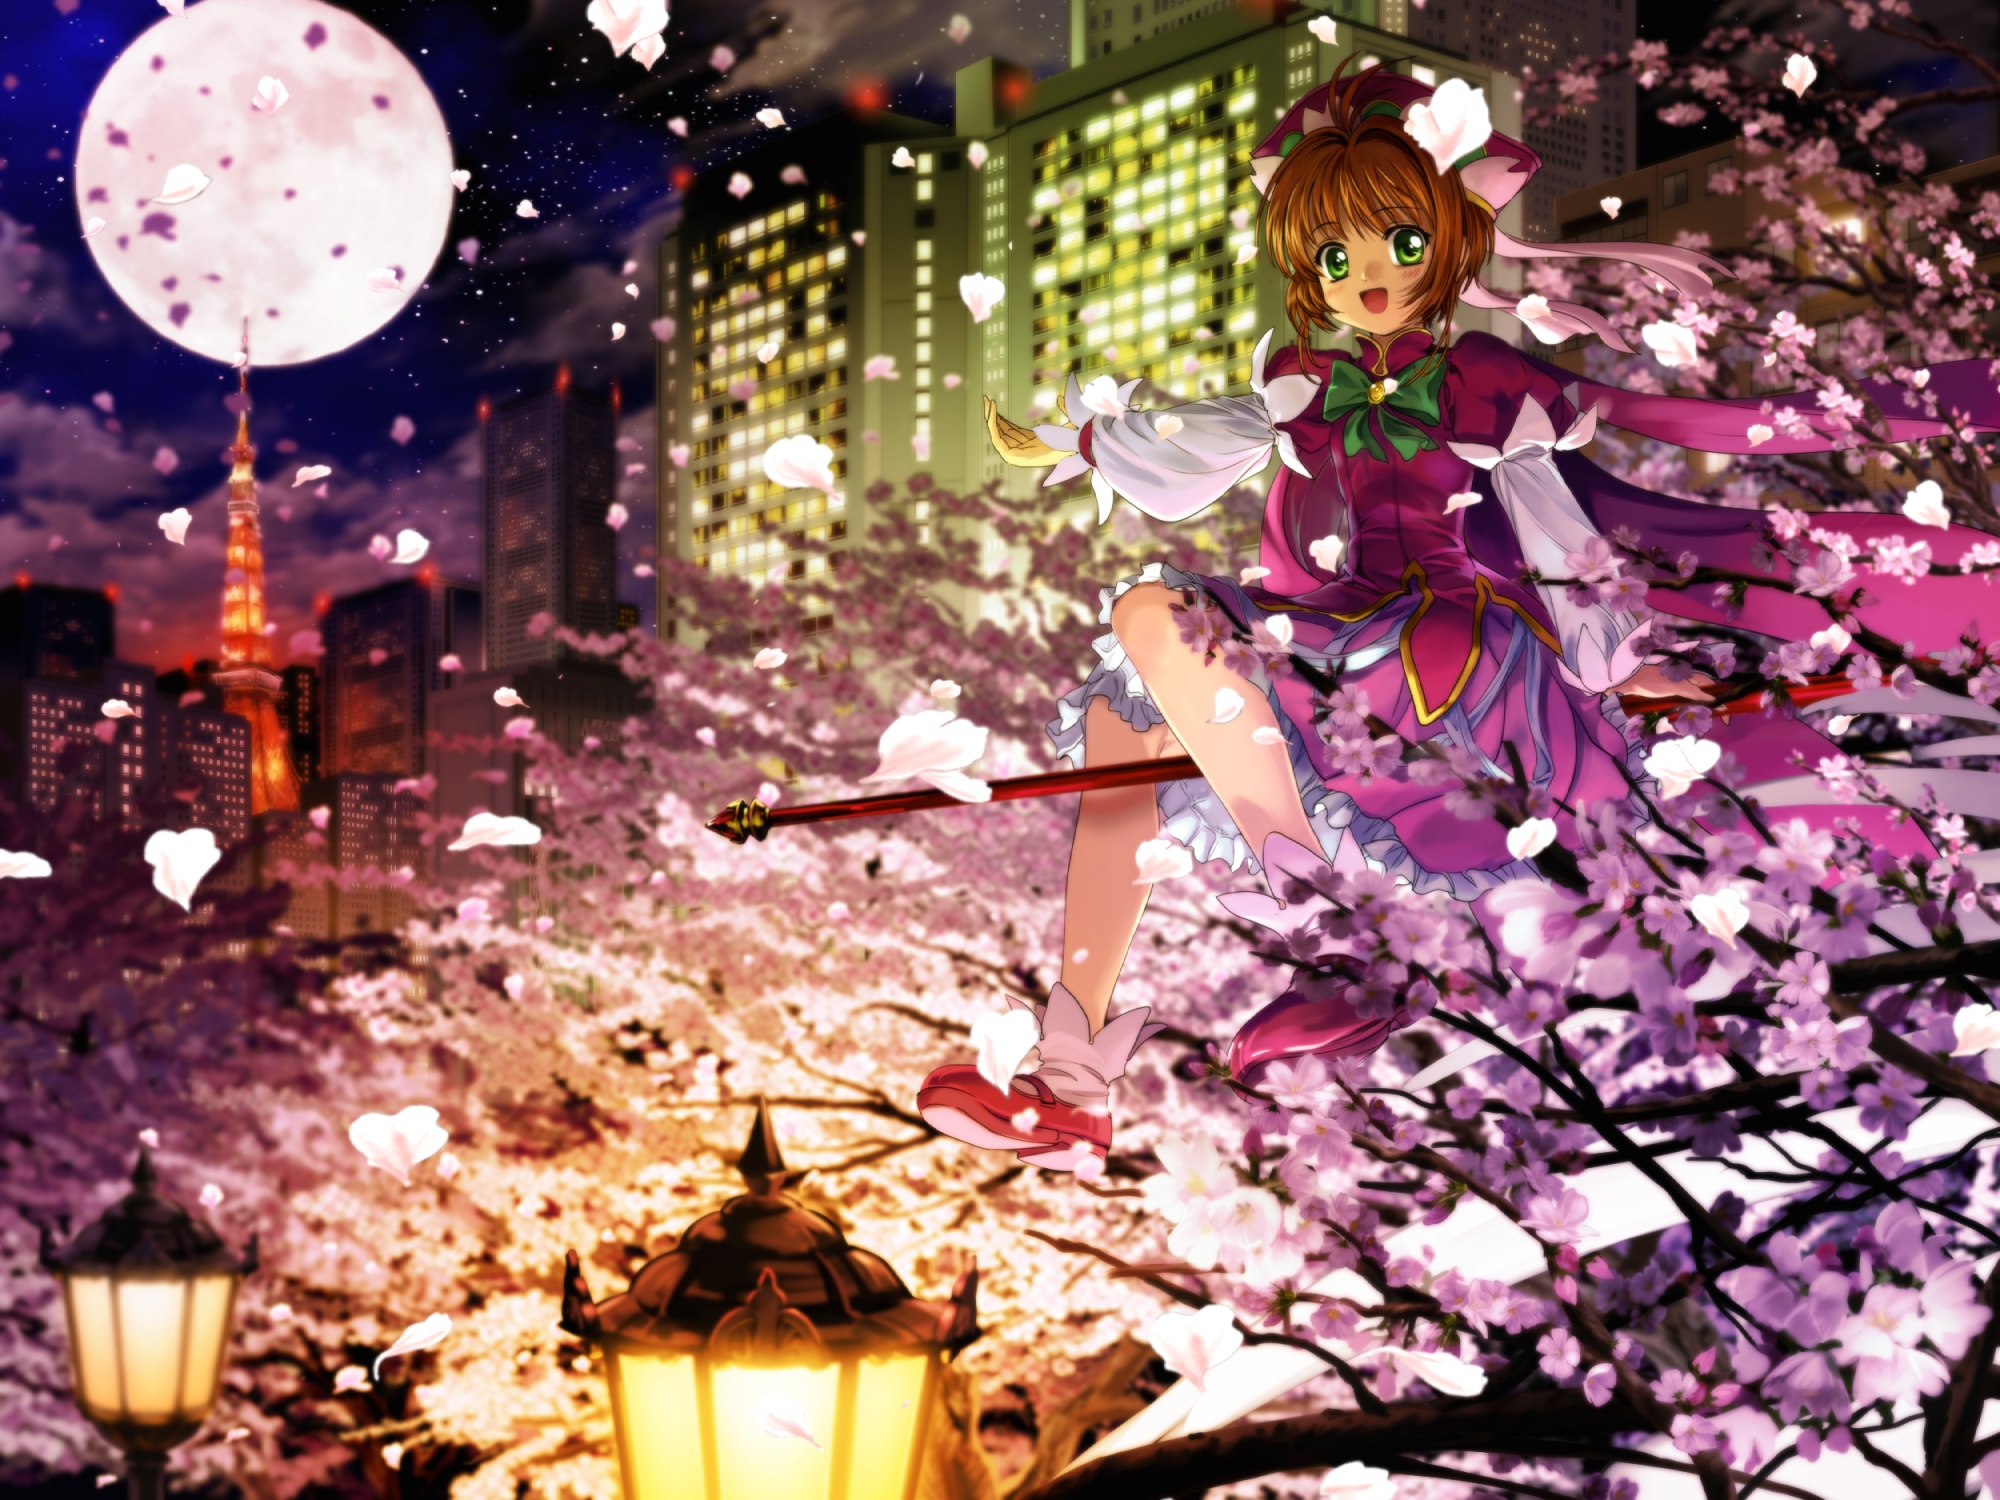 Colorful Cardcaptor Sakura wallpaper featuring anime character